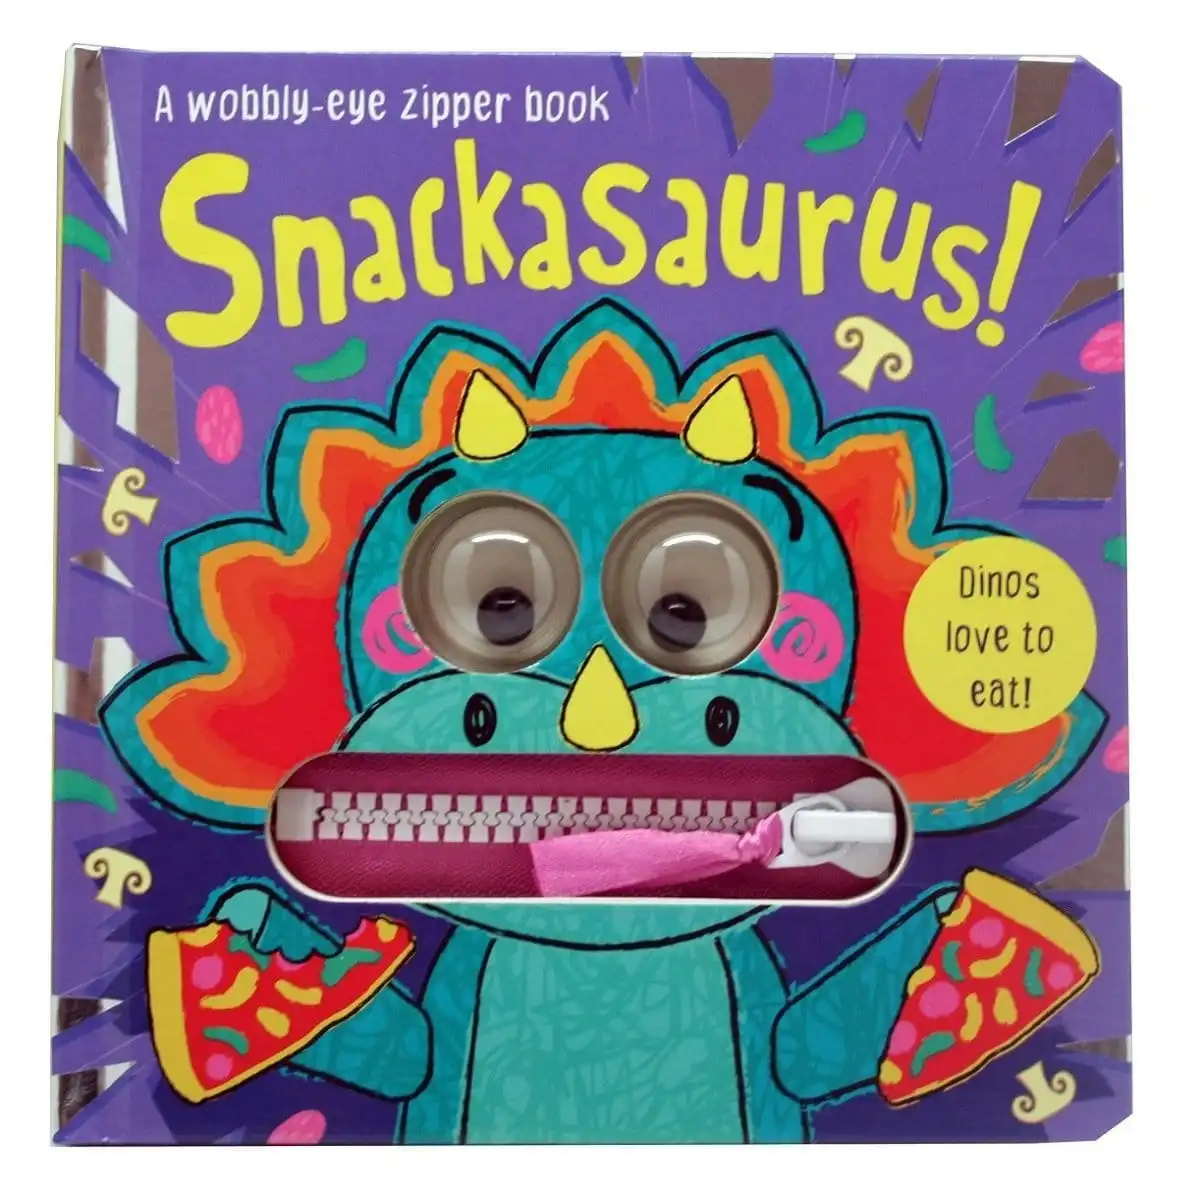 Promotional Snackasaurus!